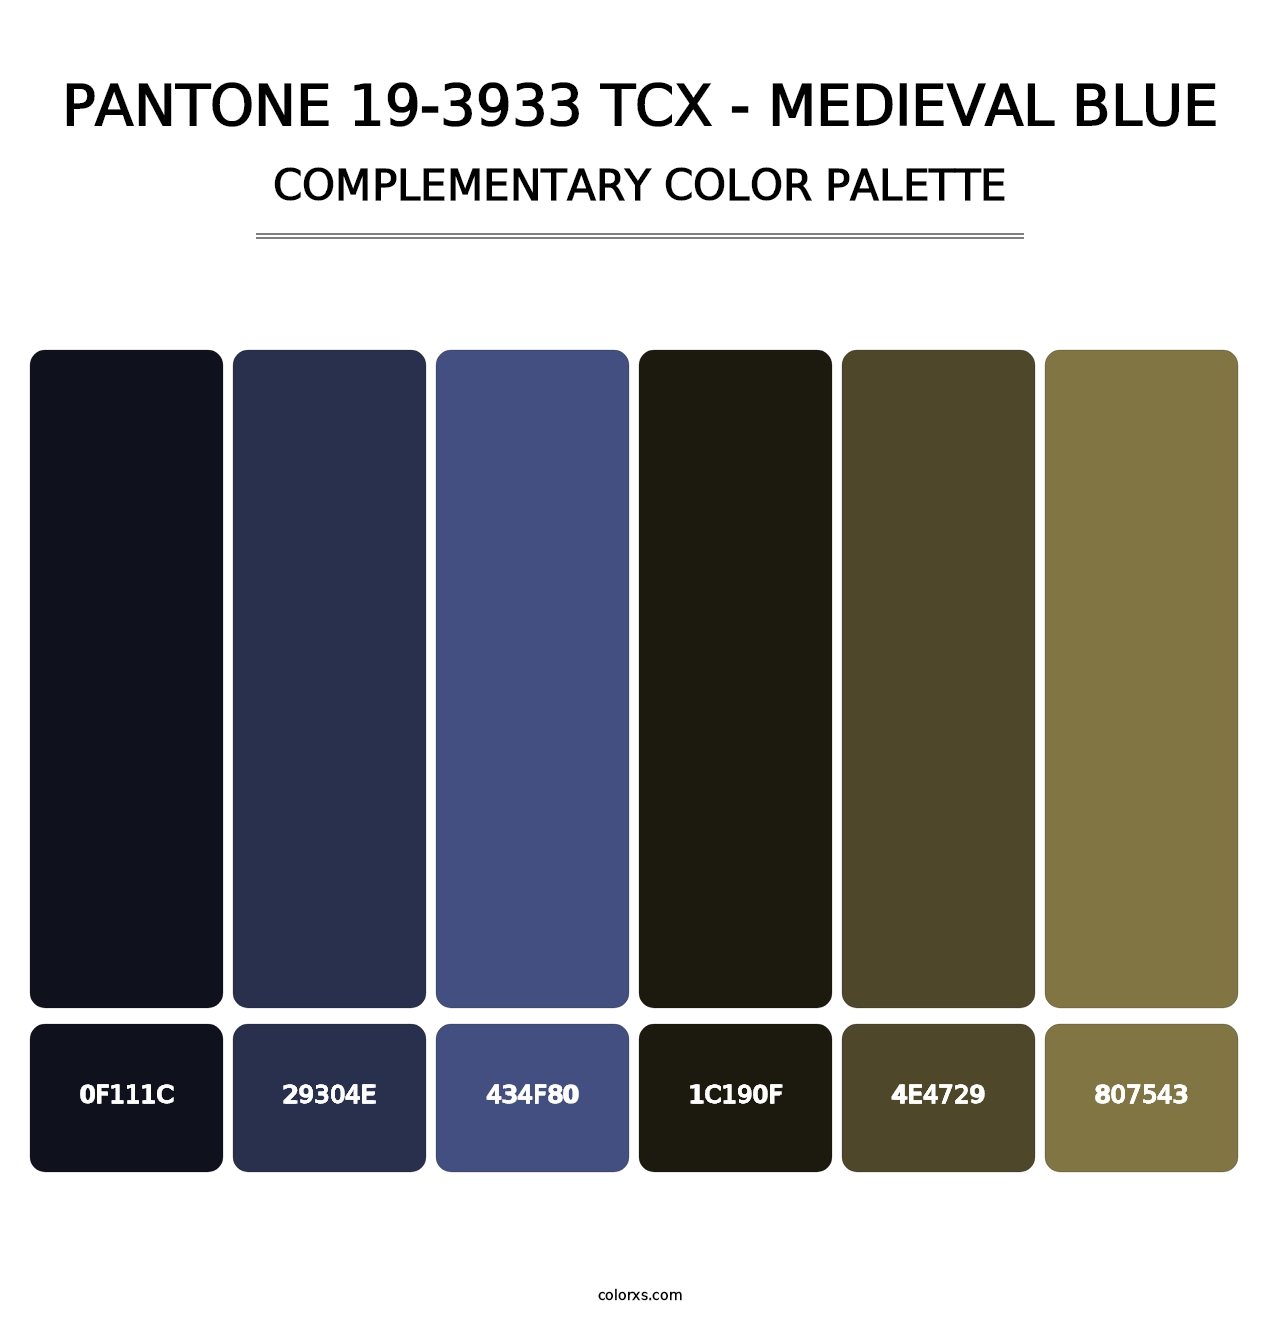 PANTONE 19-3933 TCX - Medieval Blue - Complementary Color Palette